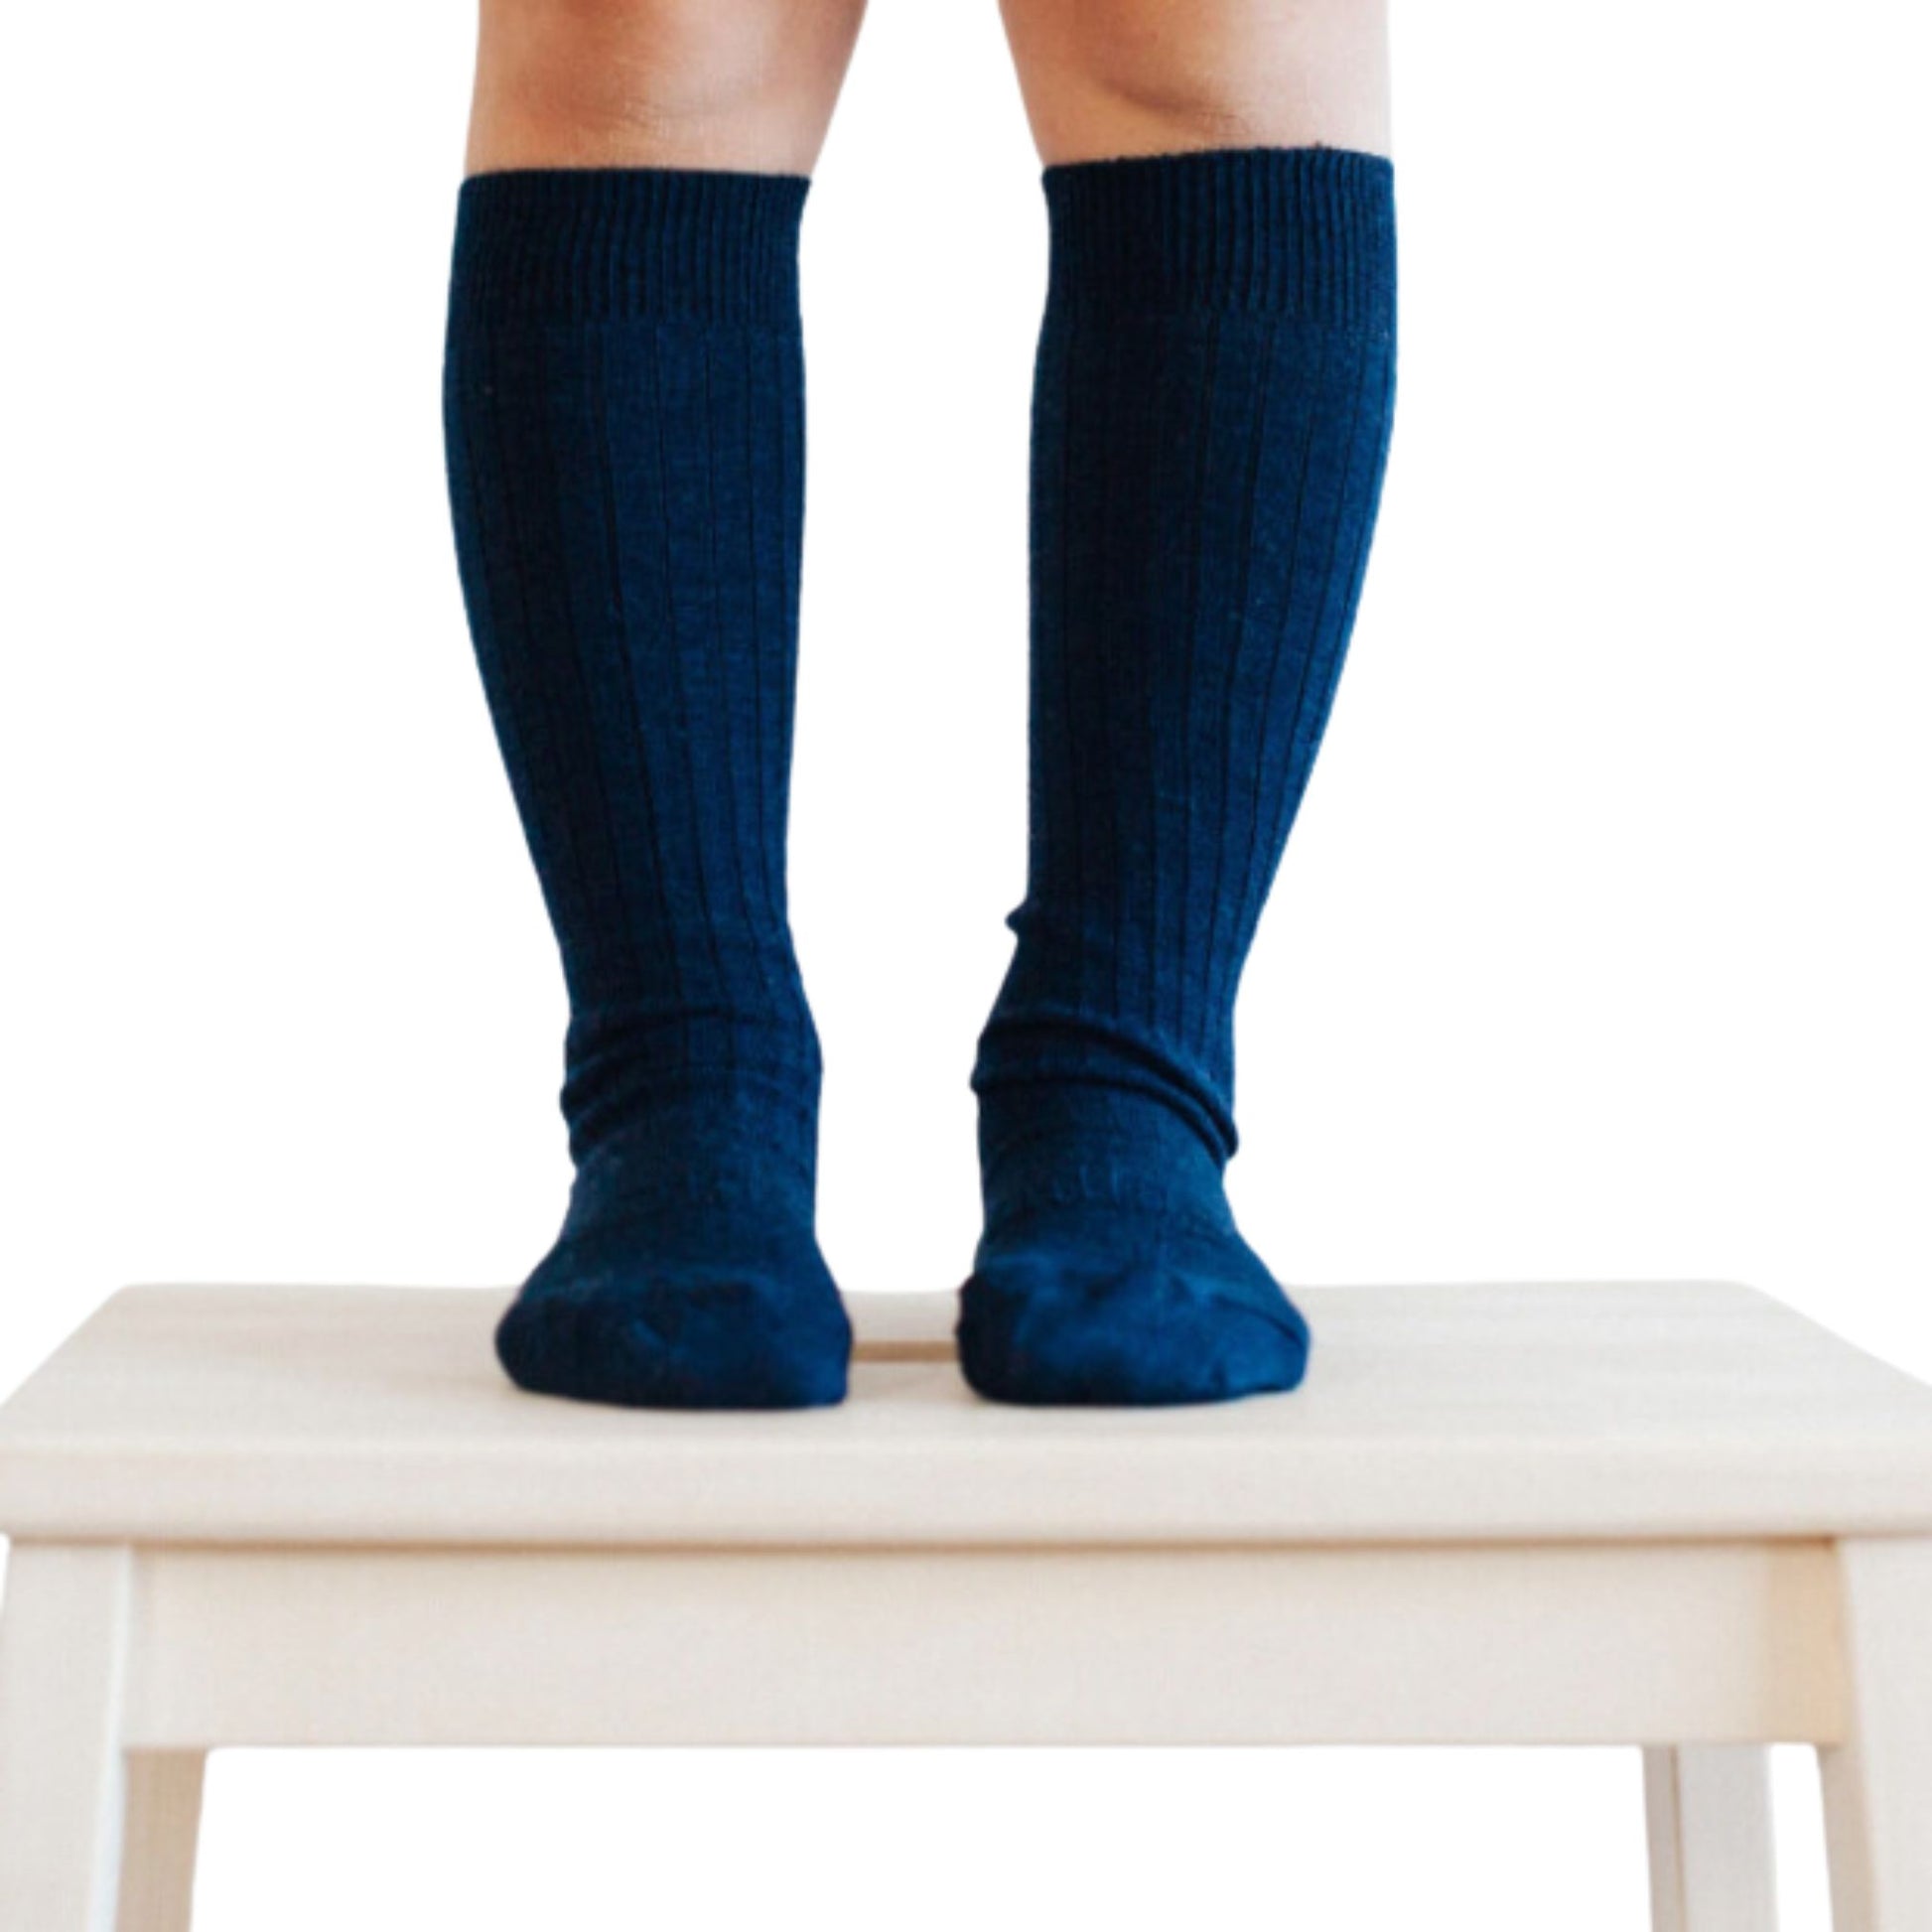 Child standing on stool wear knee high navy merino socks